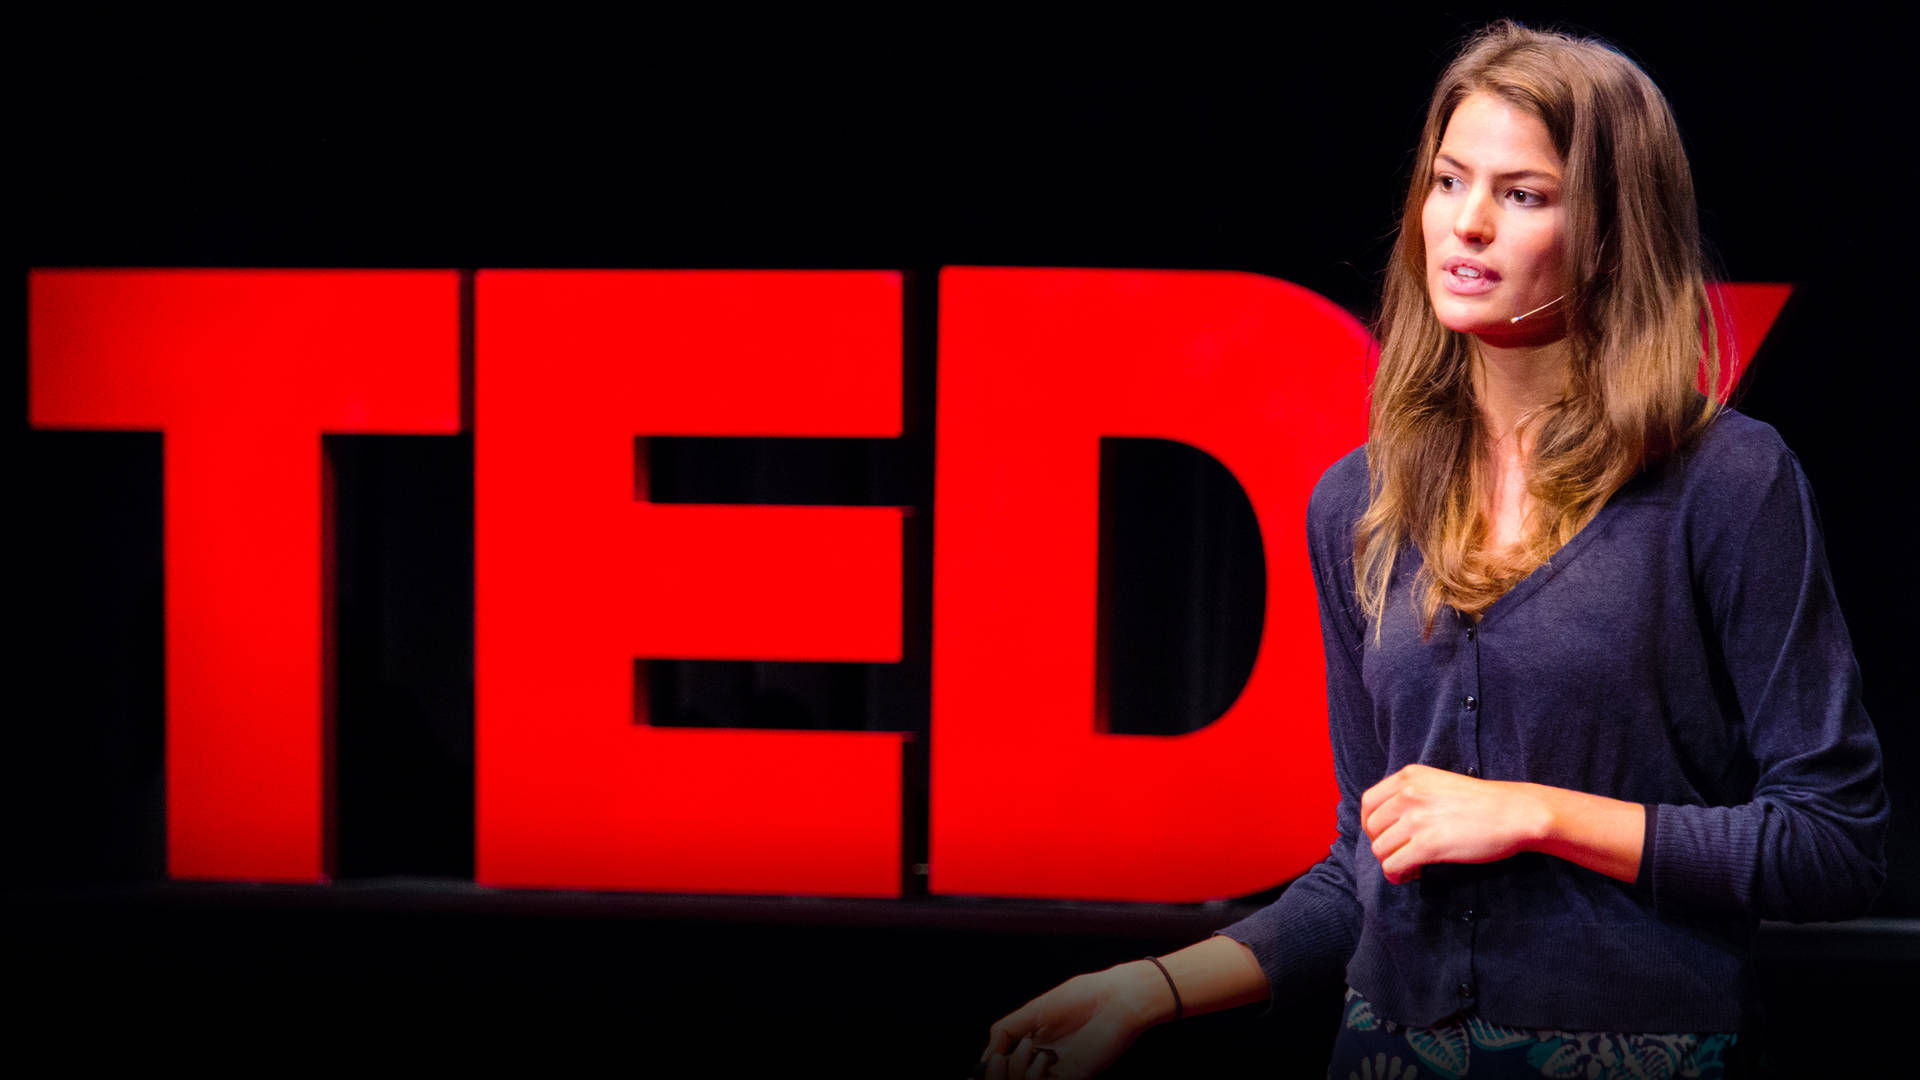 Tedx Talks Features A Female Speaker Wallpaper